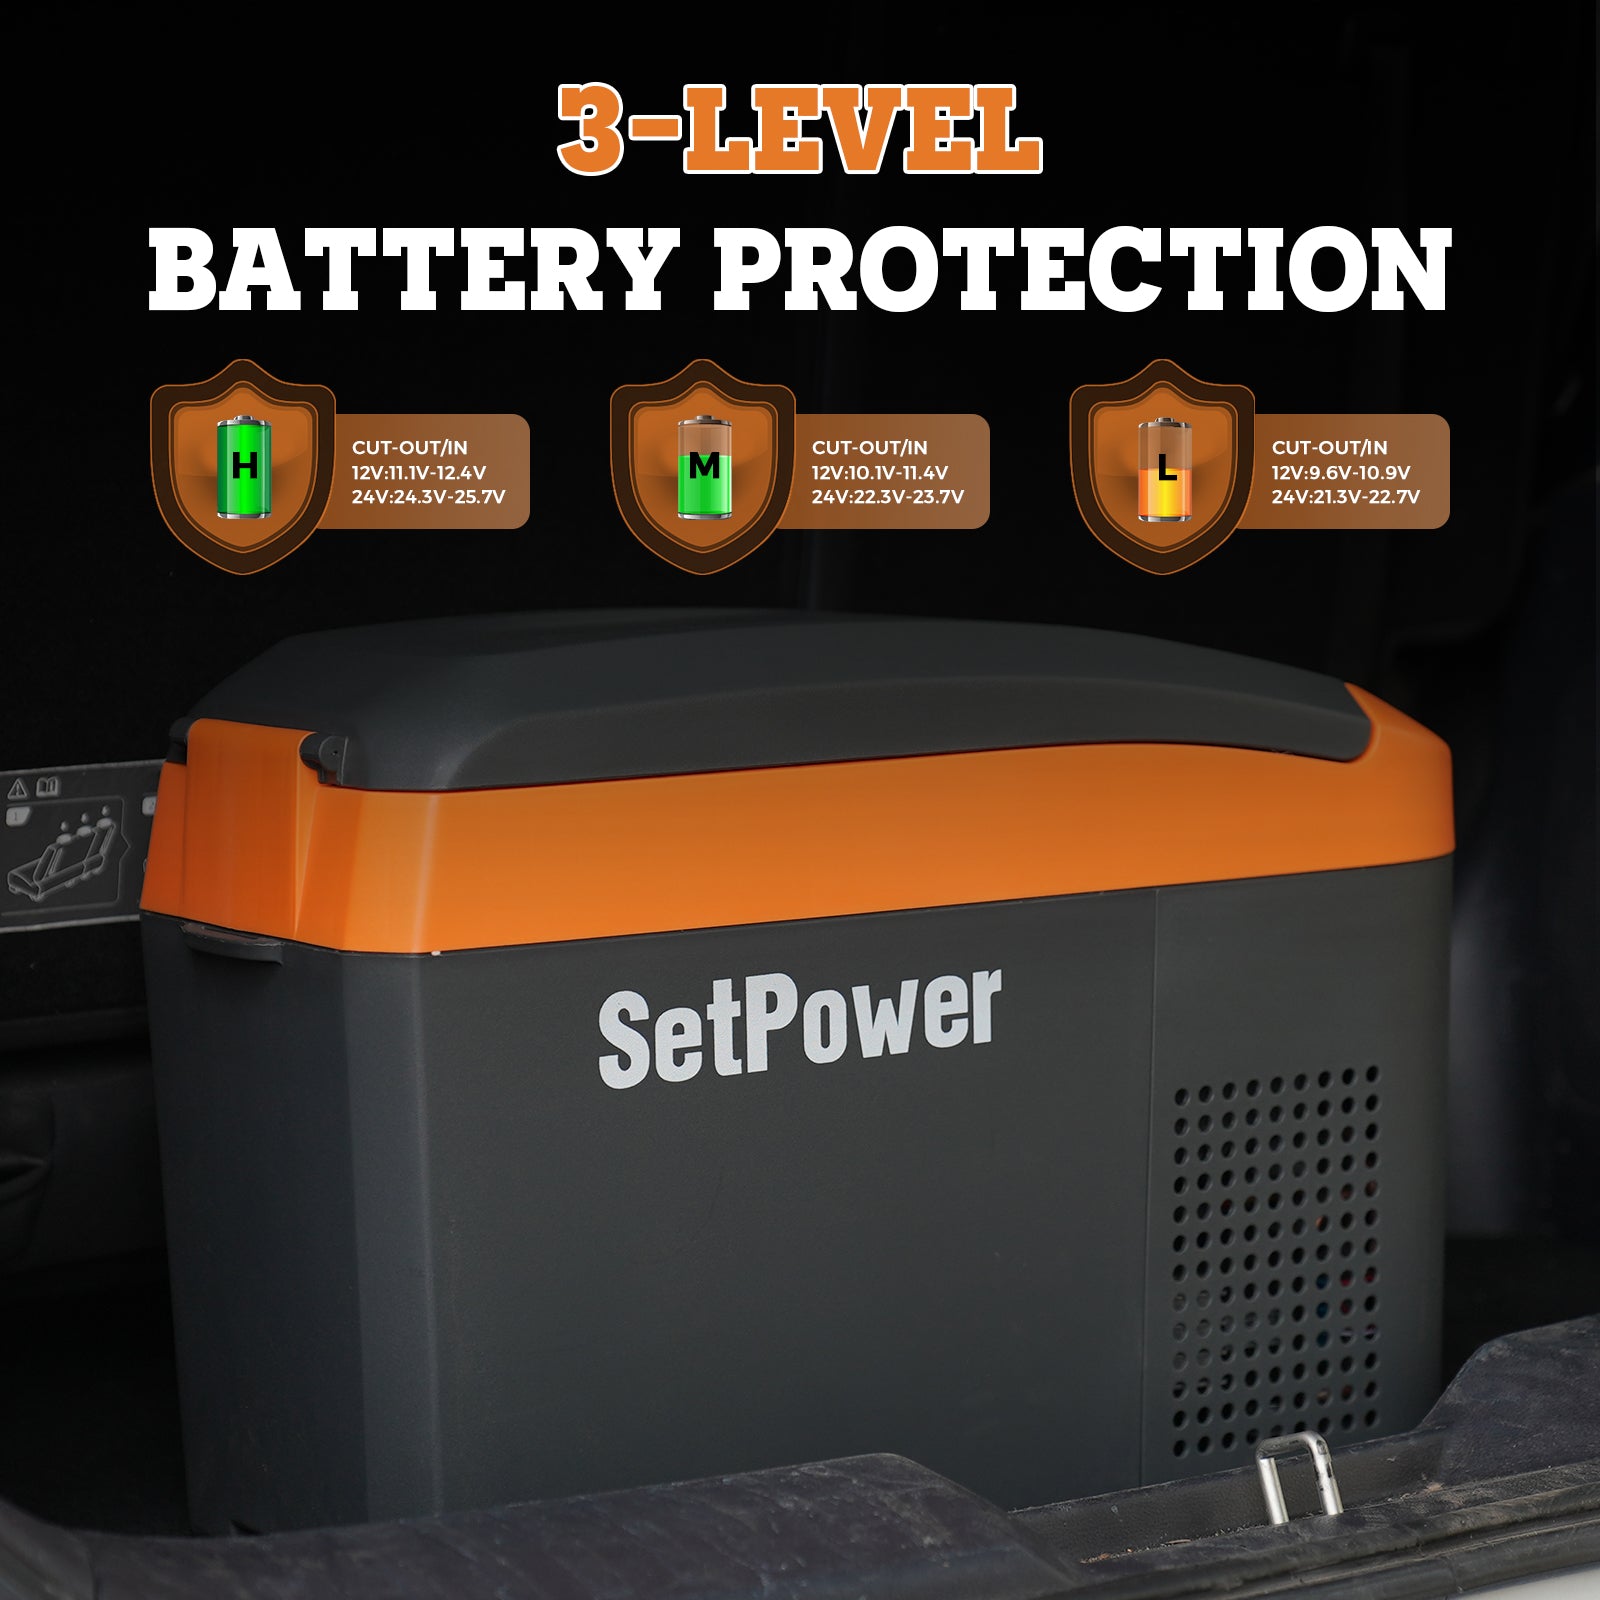 Early Bird | Setpower 16Qt 12V Portable Fridge Freezer Electric cooler AB15 Orange